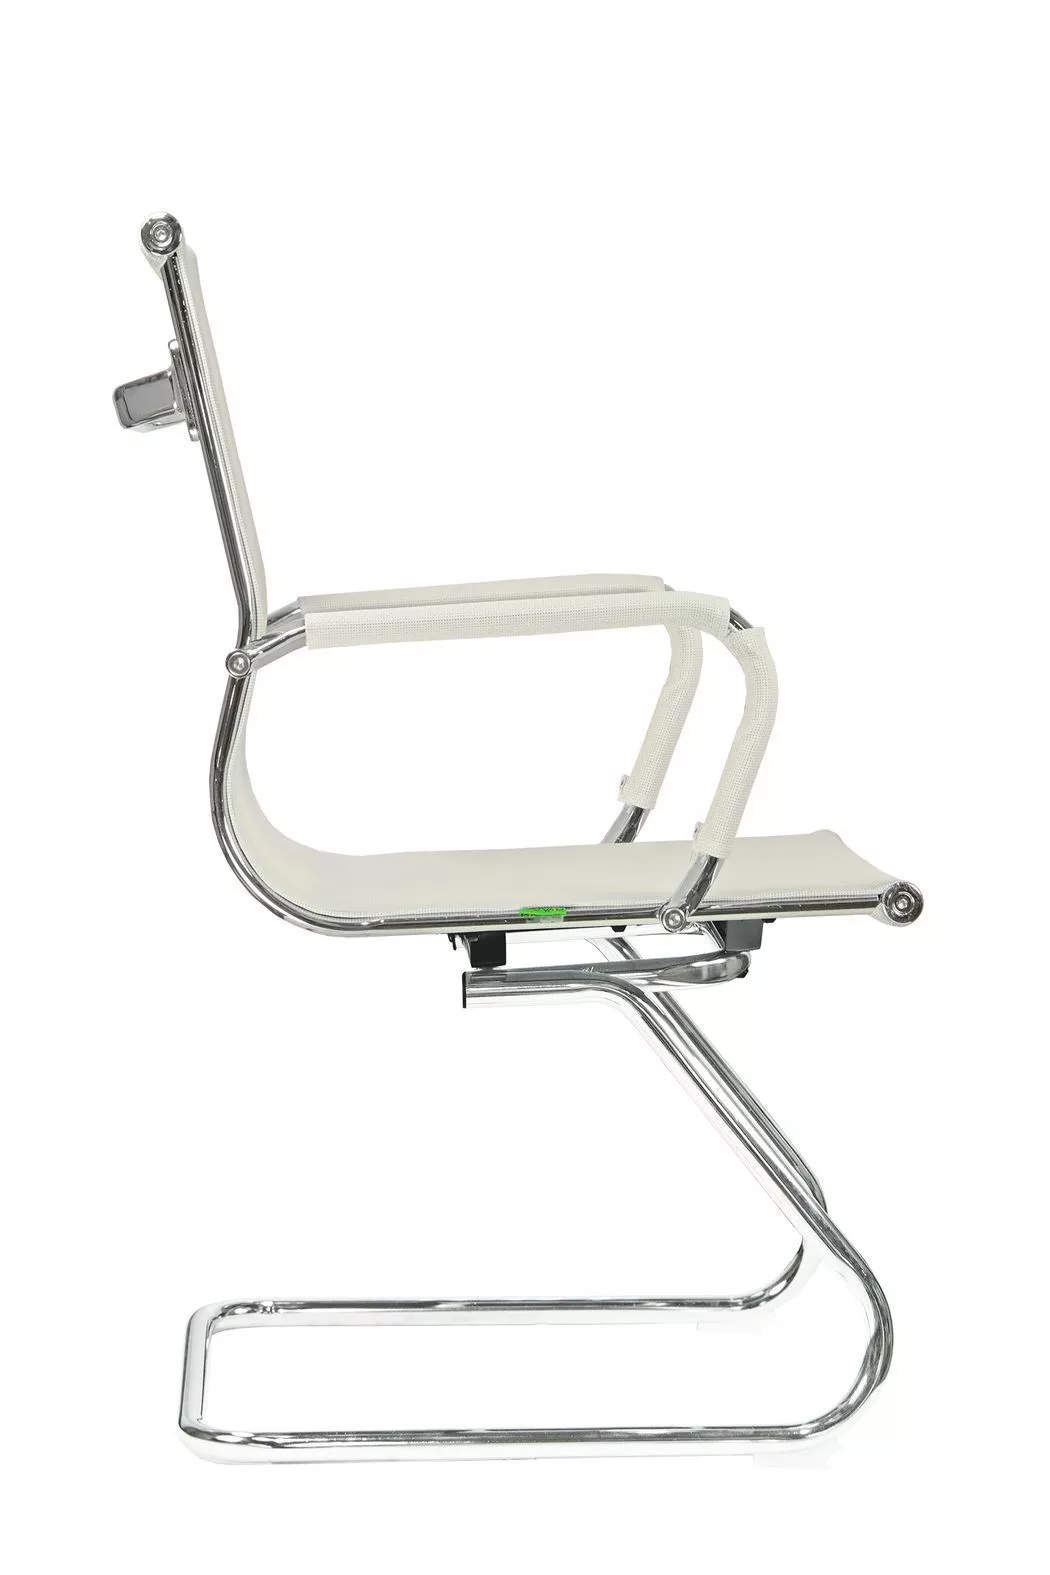 Конференц кресло Riva Chair Hugo 6001-3 белый